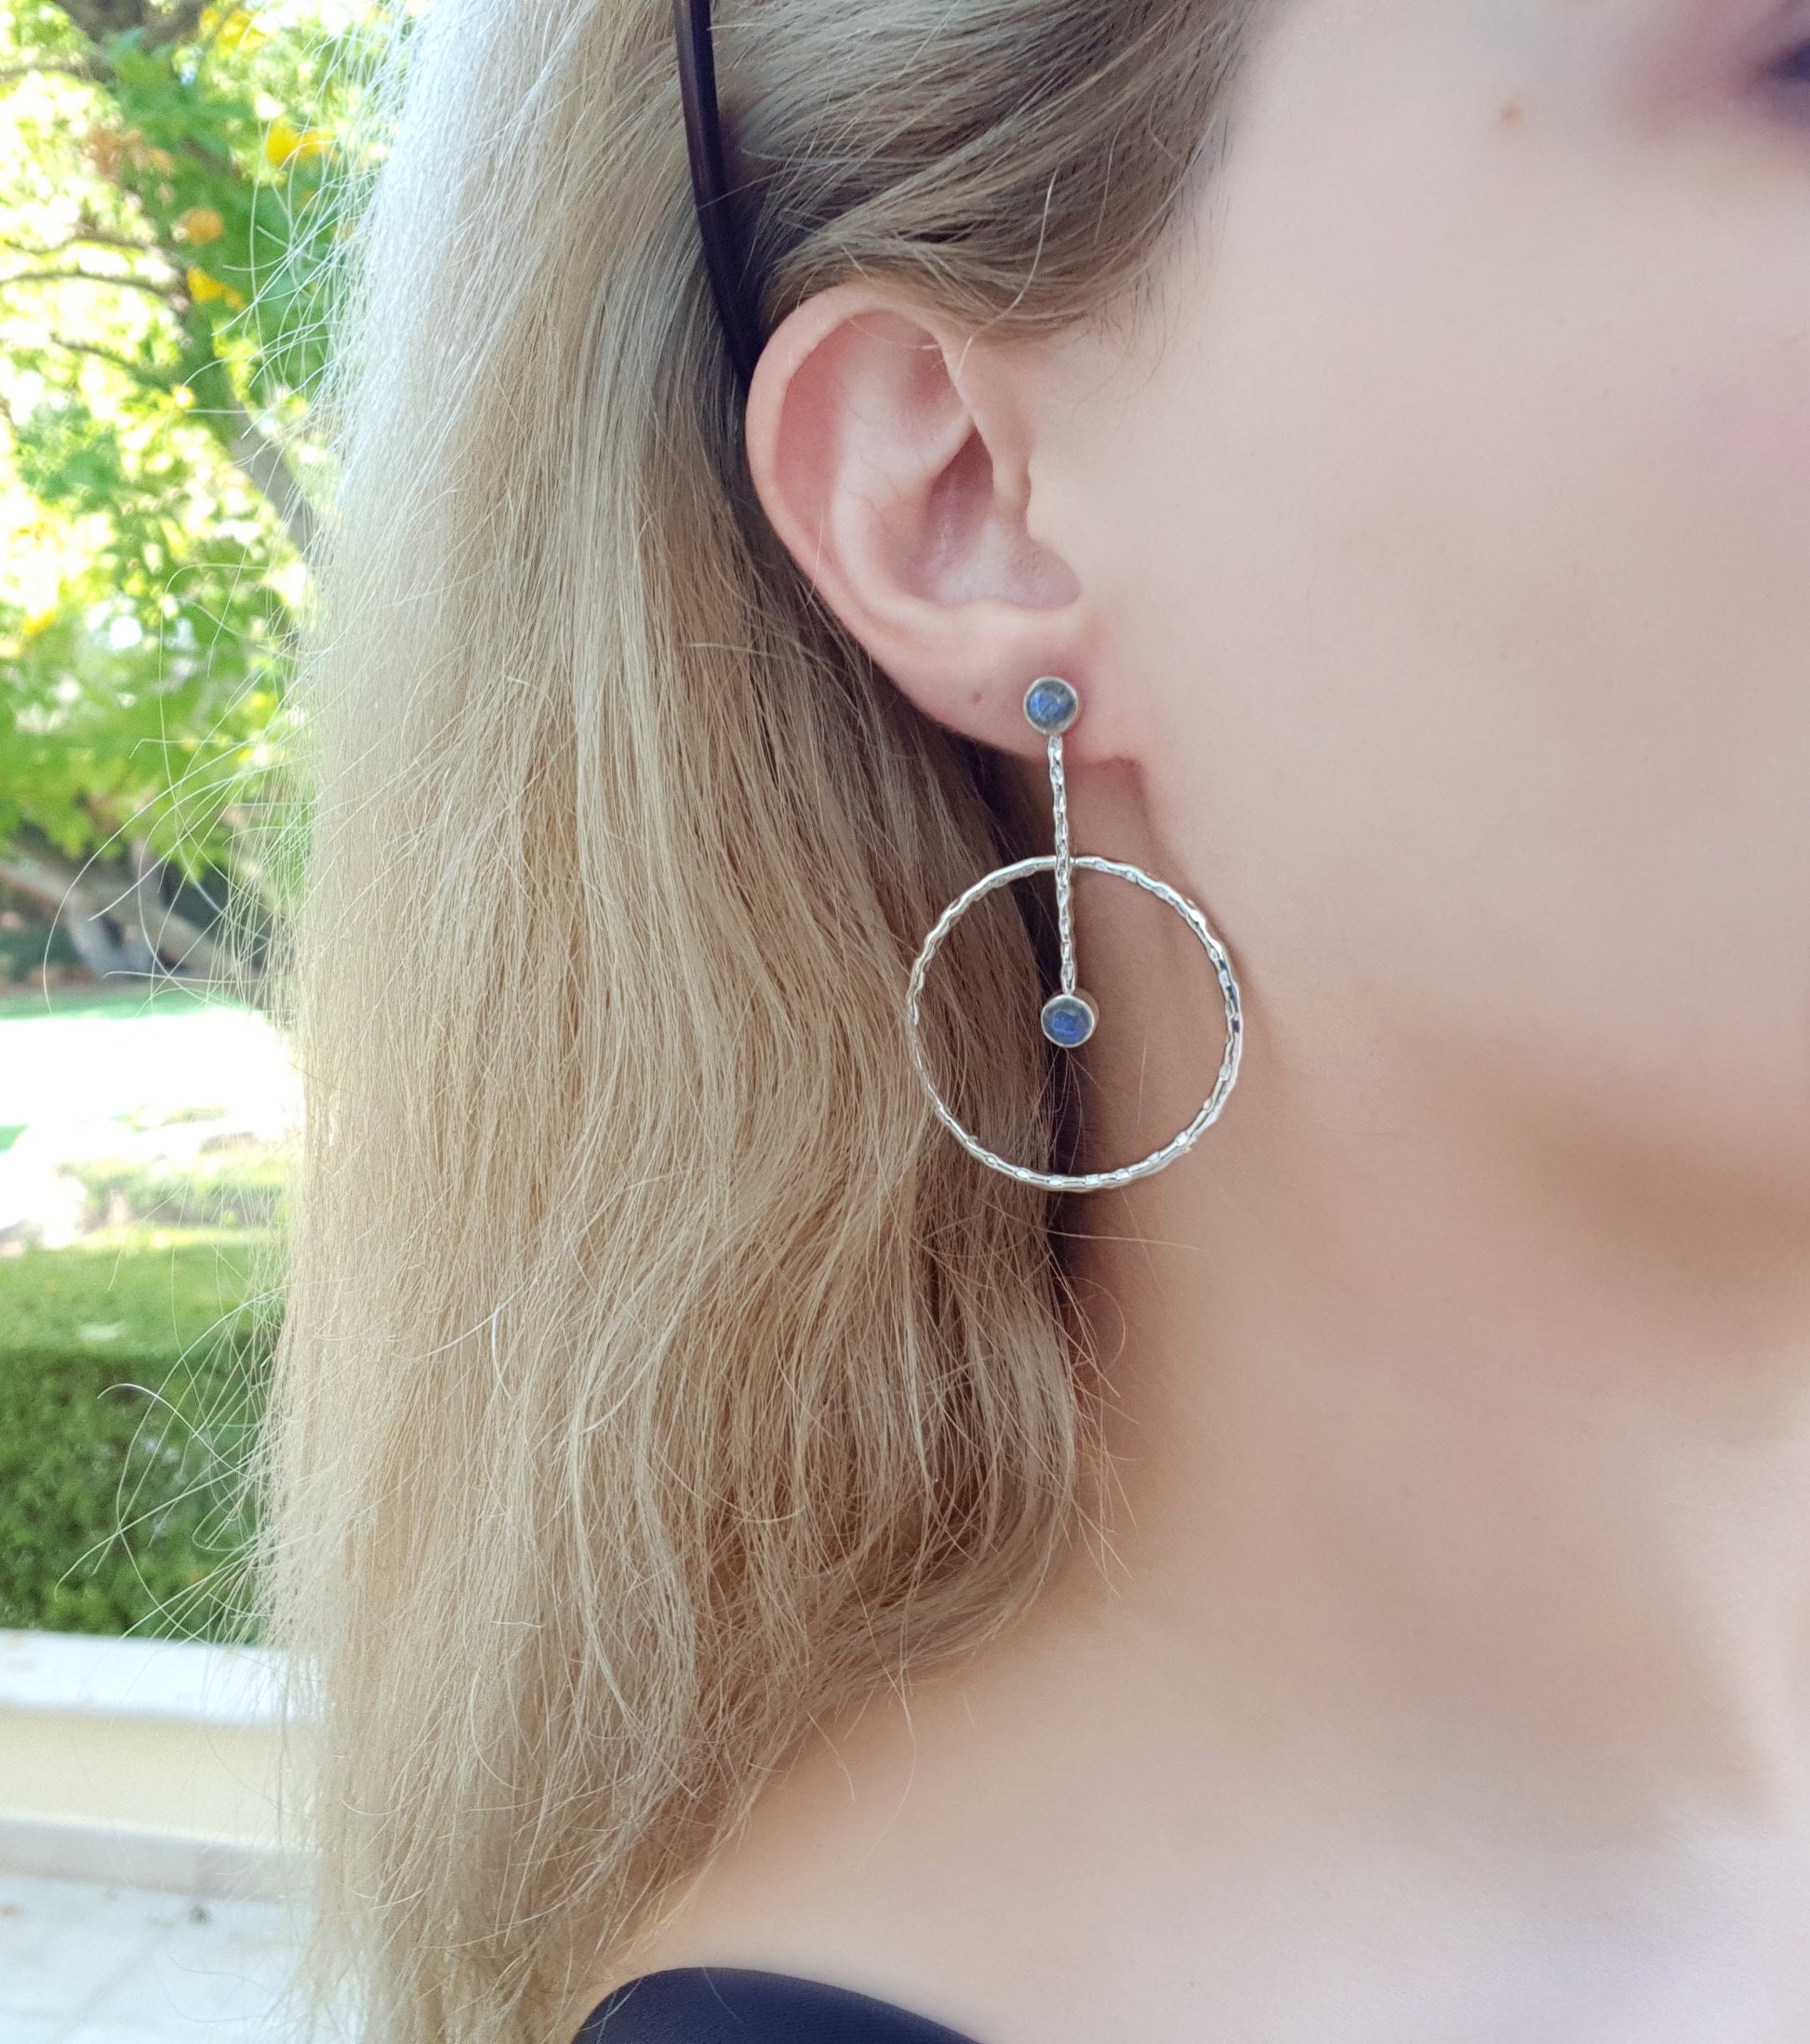 Labradorite Dangle Earrings Sterling Silver Statement Earrings Boho Earrings Minimal Circle Earrings Unique Gift For Her